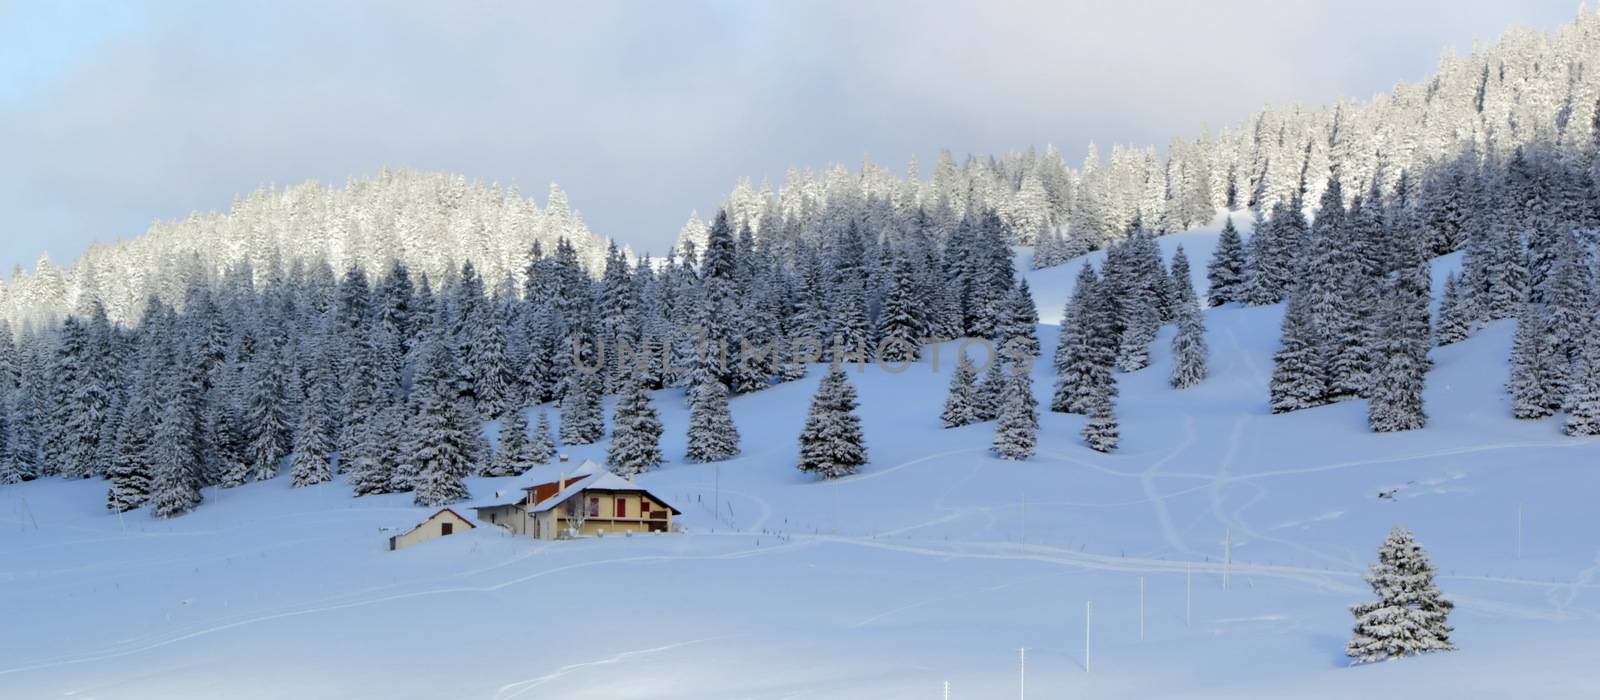 Jura mountain in winter, Switzerland by Elenaphotos21